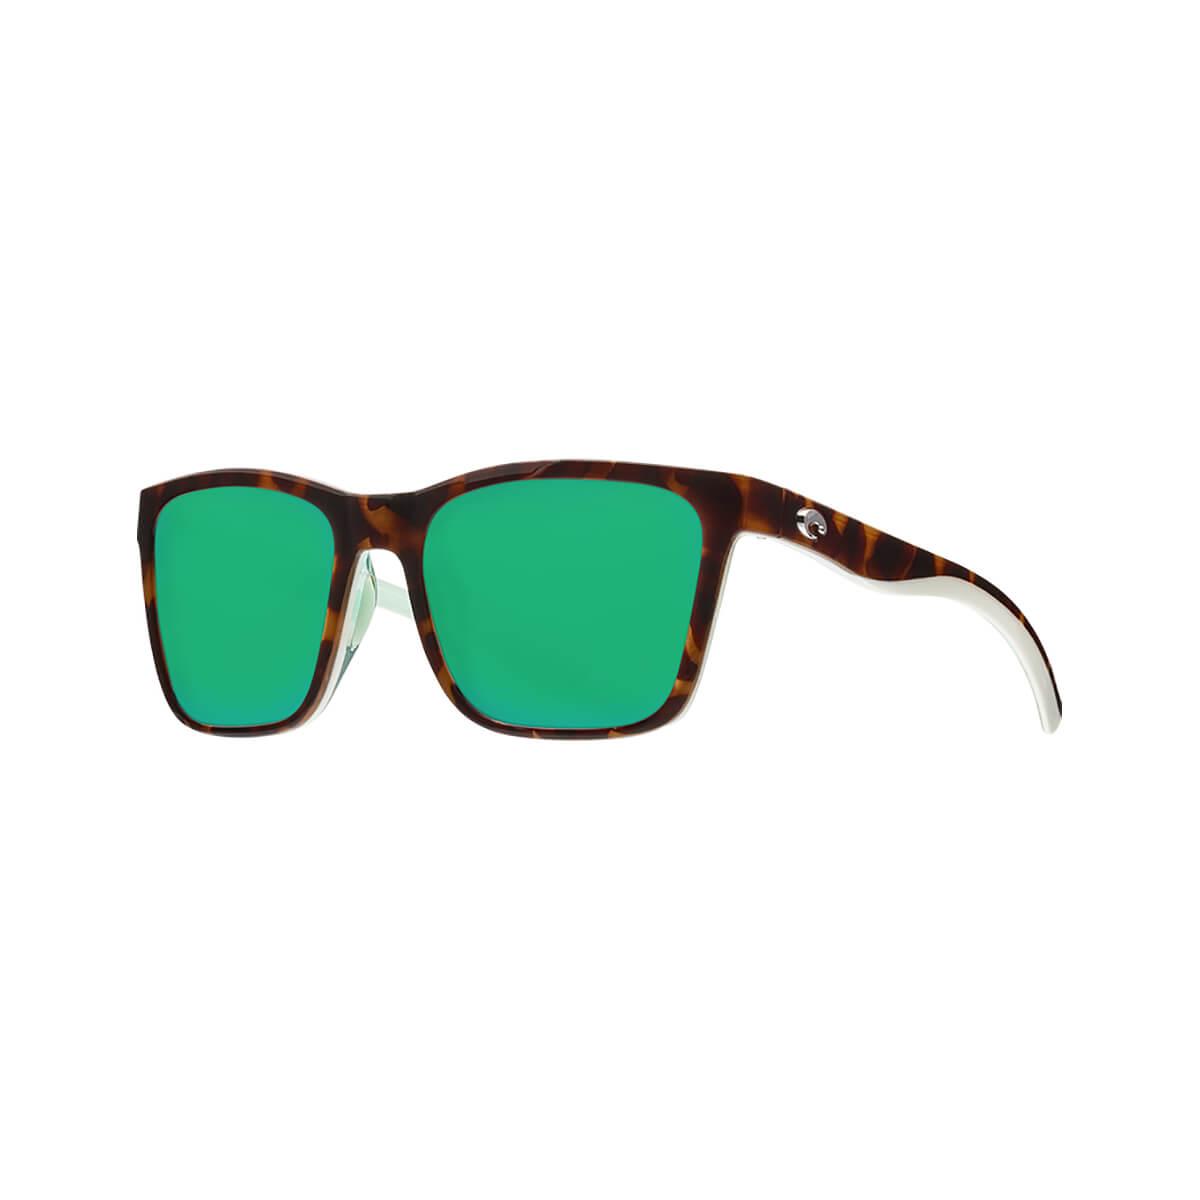  Panga 580p Sunglasses - Polarized Plastic